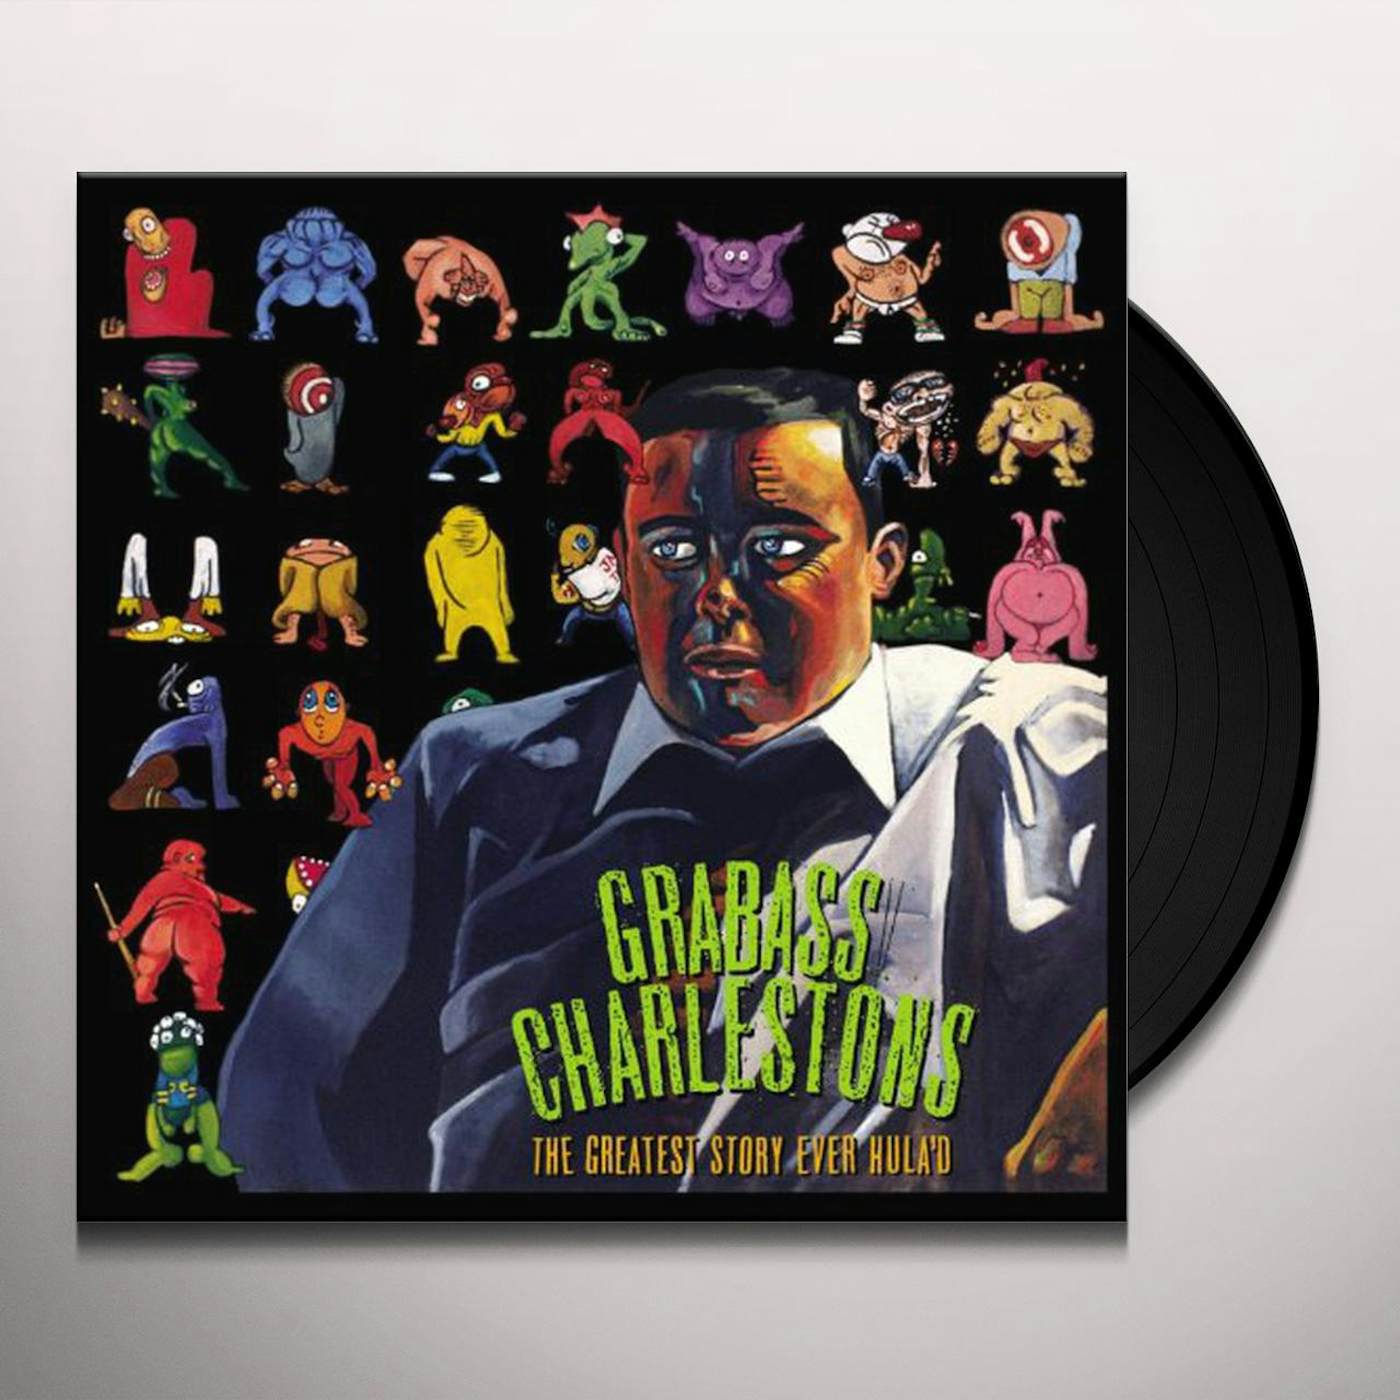 Grabass Charlestons GREATEST STORY EVER HULA'D Vinyl Record